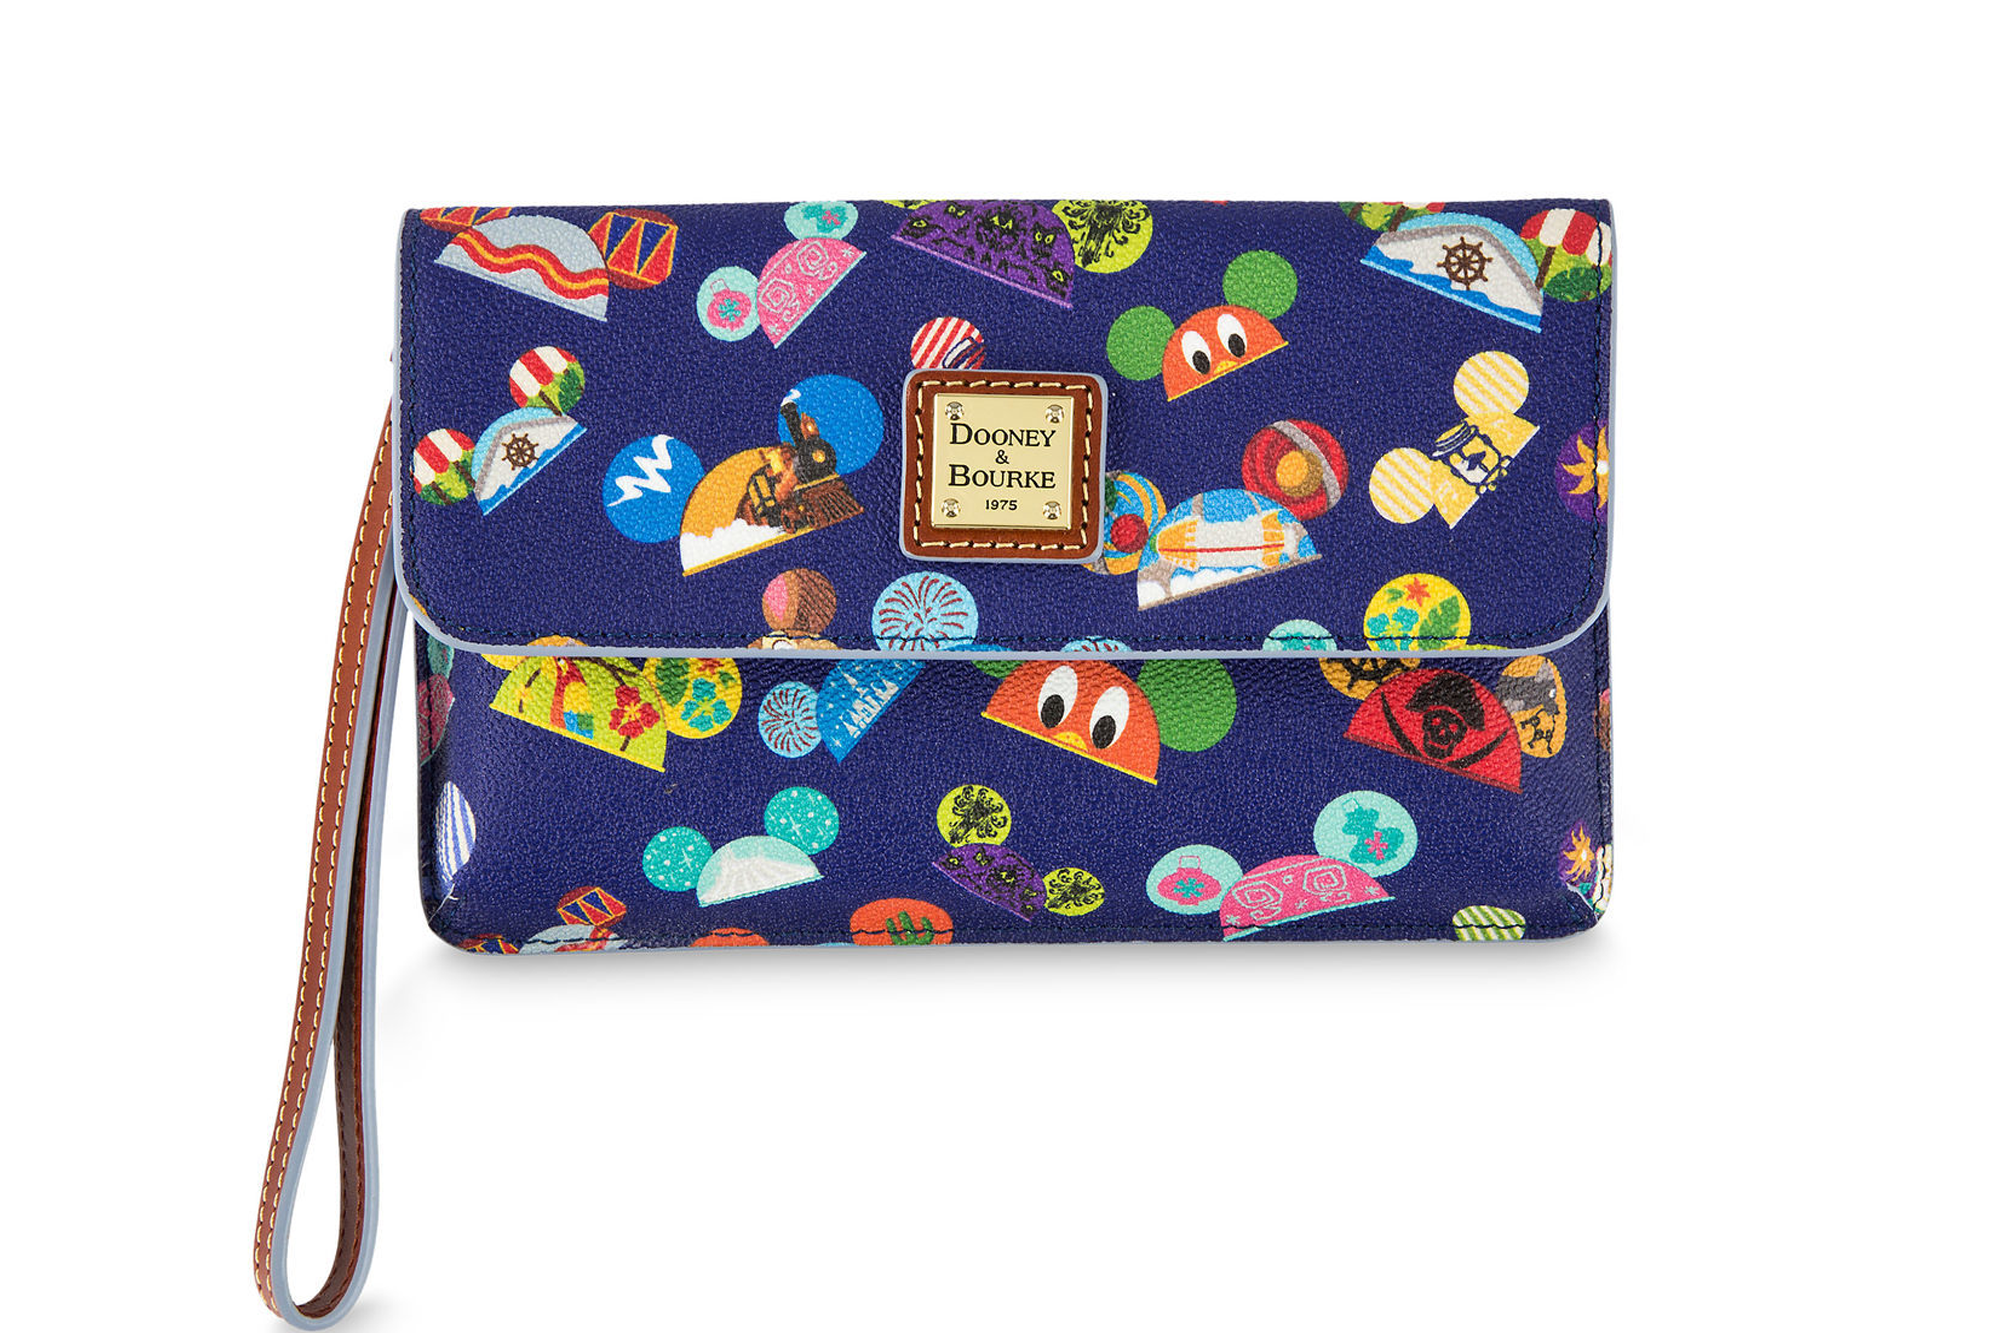 New Dooney and Bourke Handbags Featuring Walt Disney World Attractions